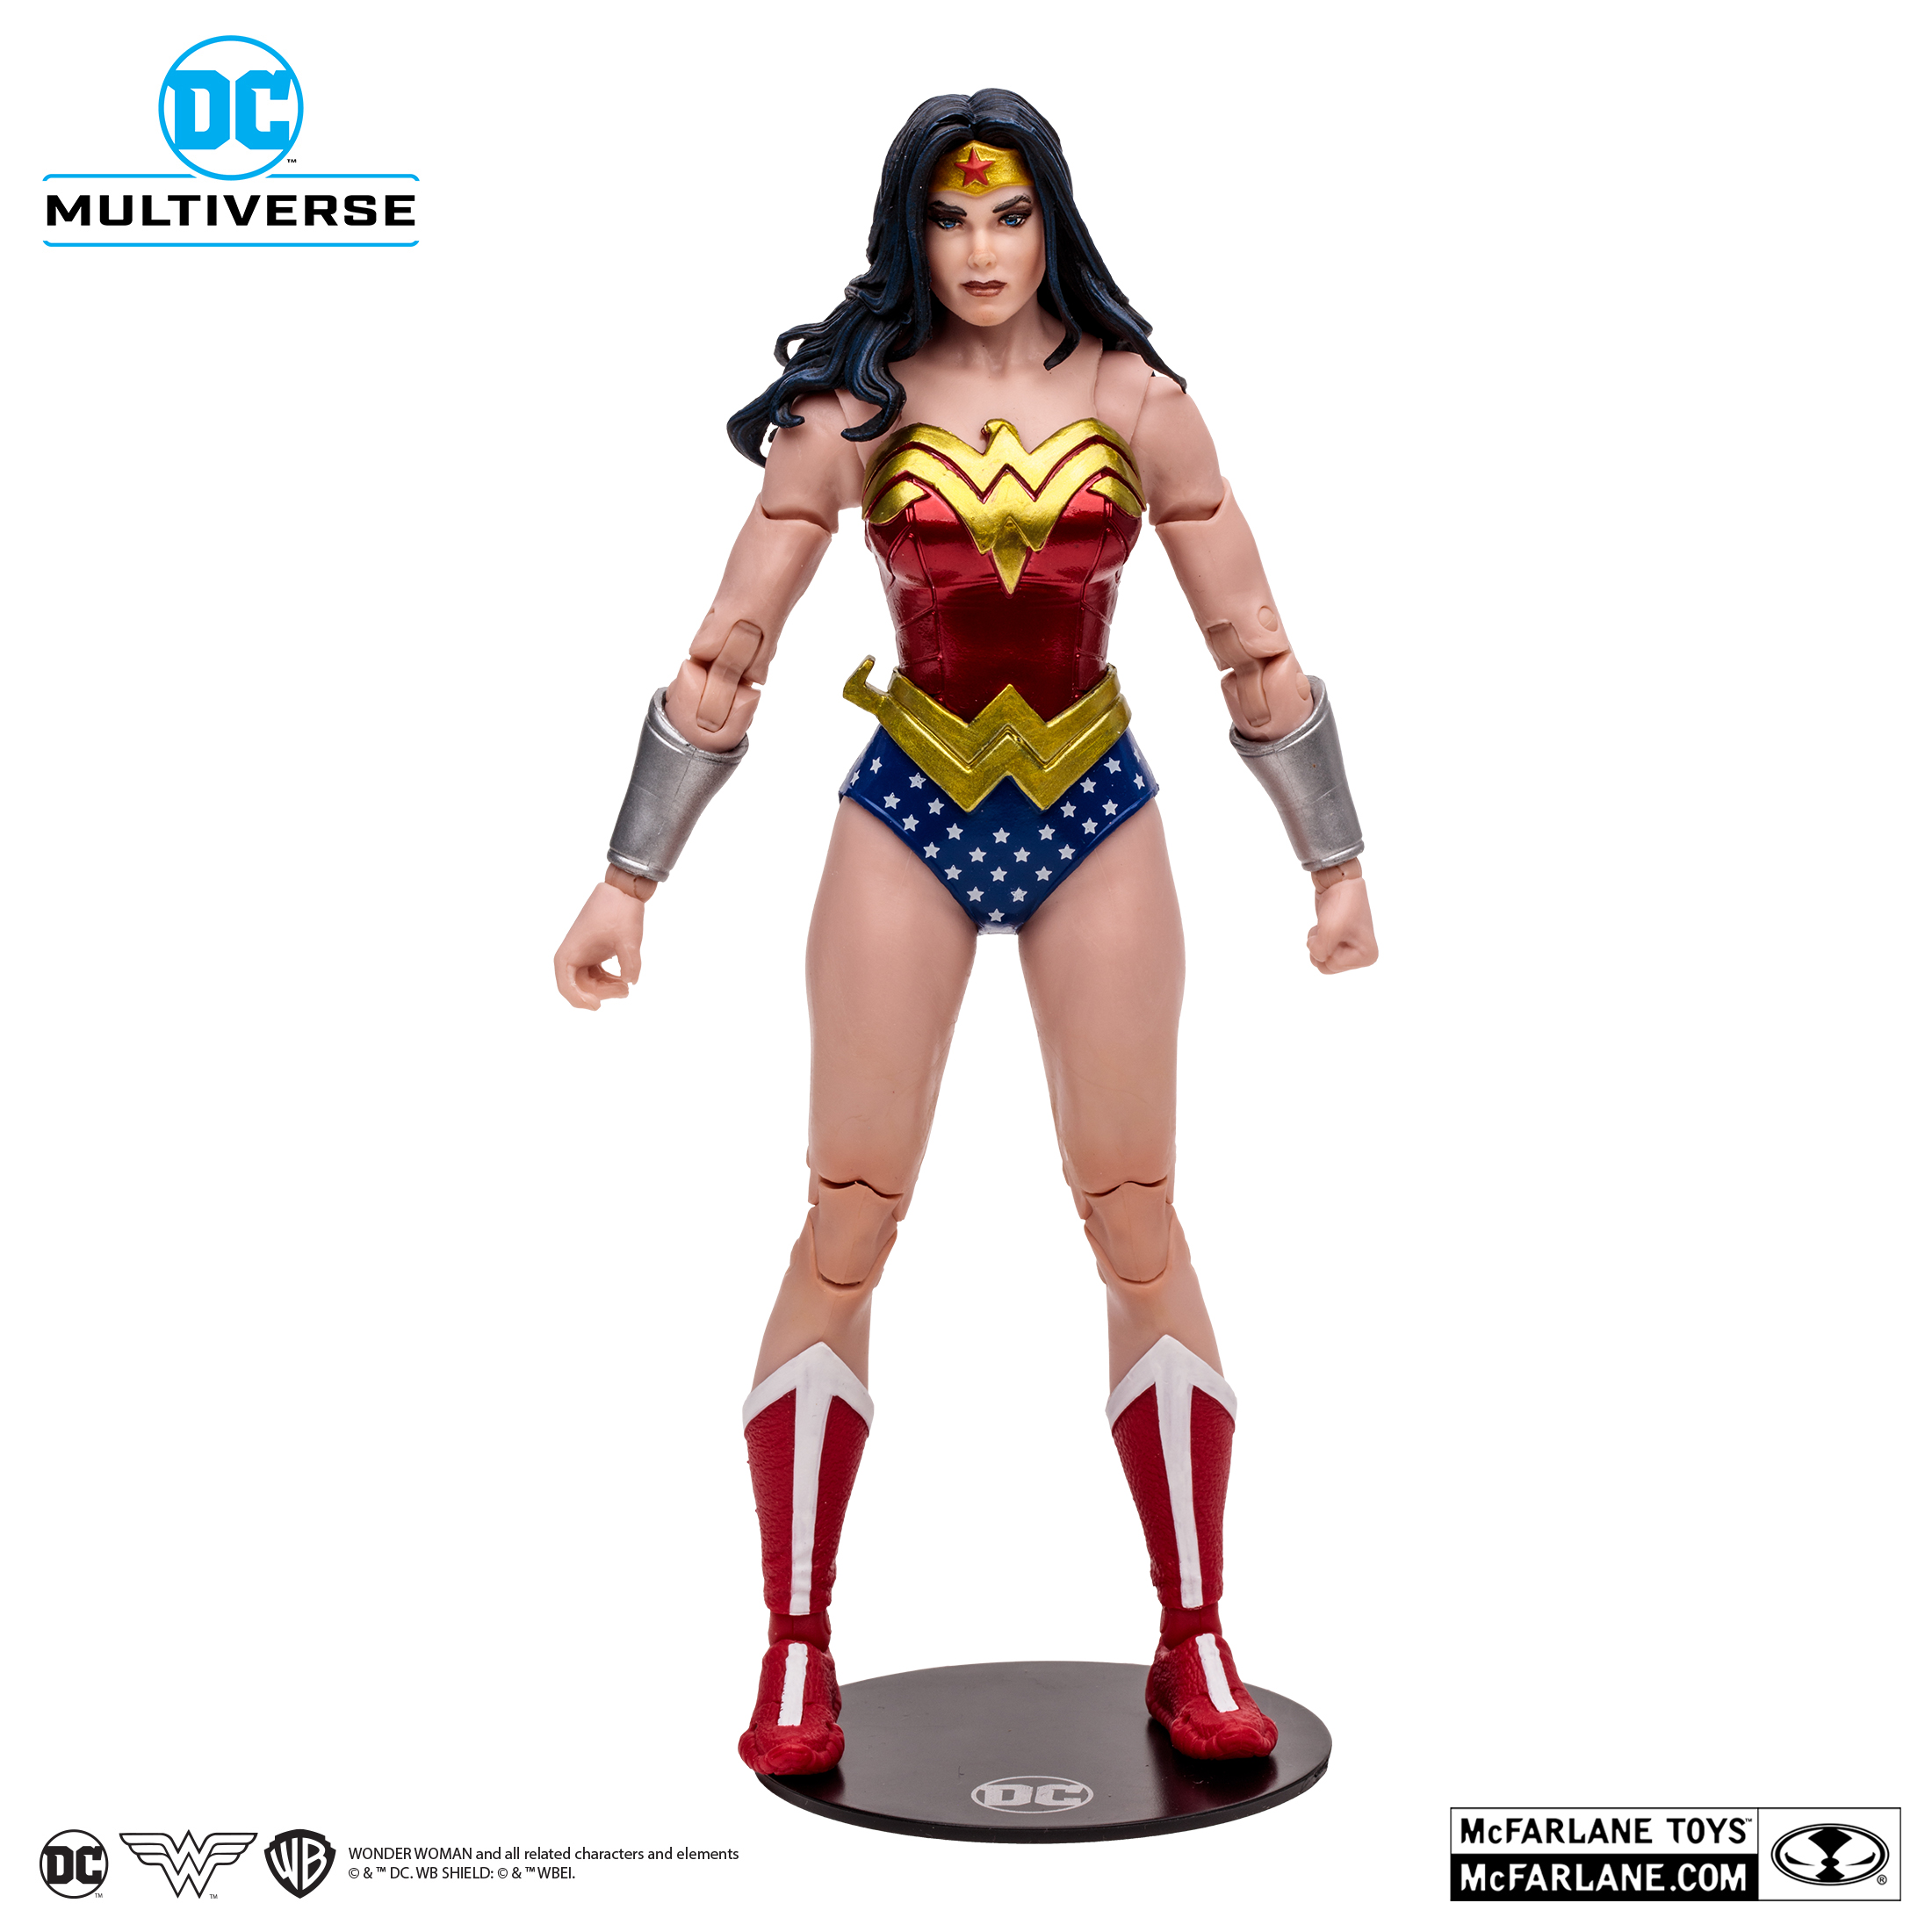 McFarlane Toys Collector Edition DC Multiverse Wonder Woman